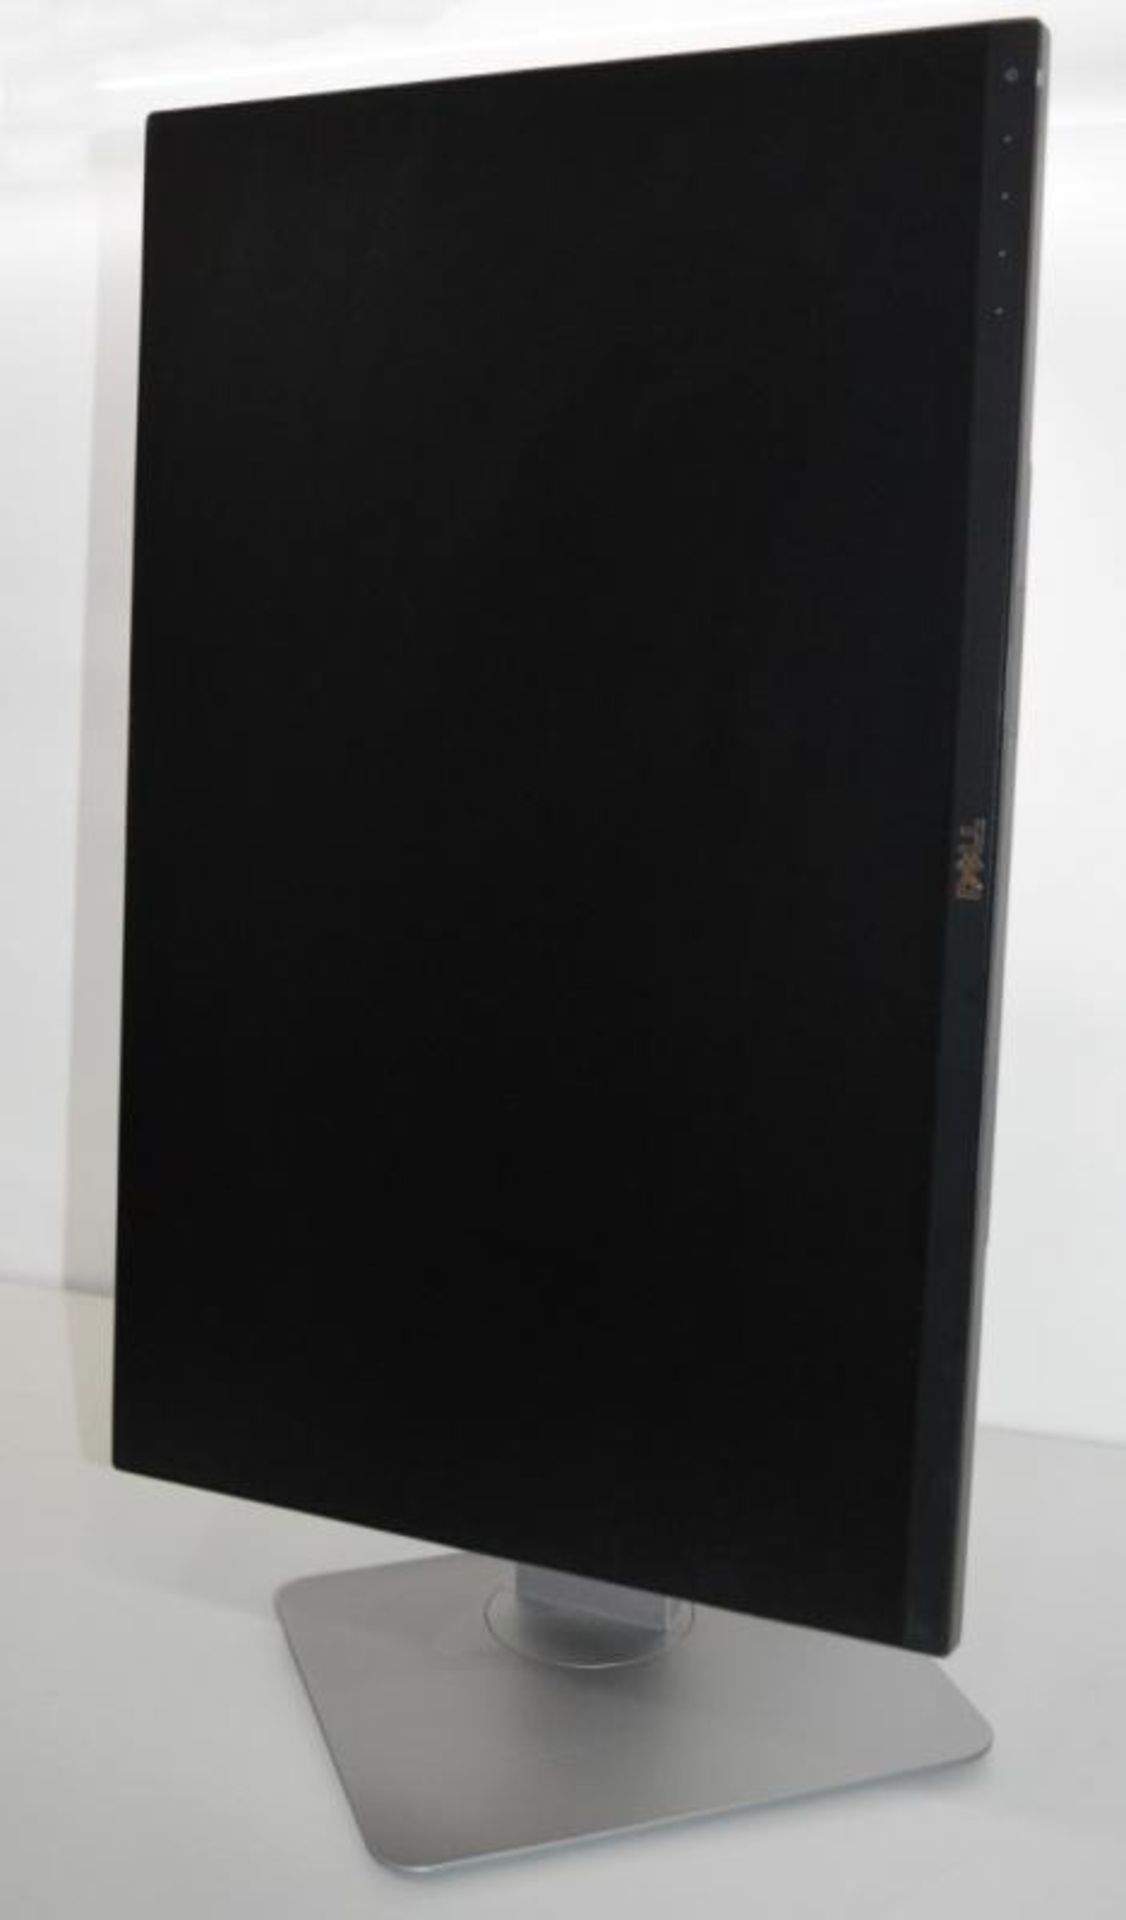 1 x Dell U2415B Ultrasharp FHD 24 Inch LED Flat Screen Monitor - 1920x1200 Resolution - Edge to Edge - Image 2 of 11